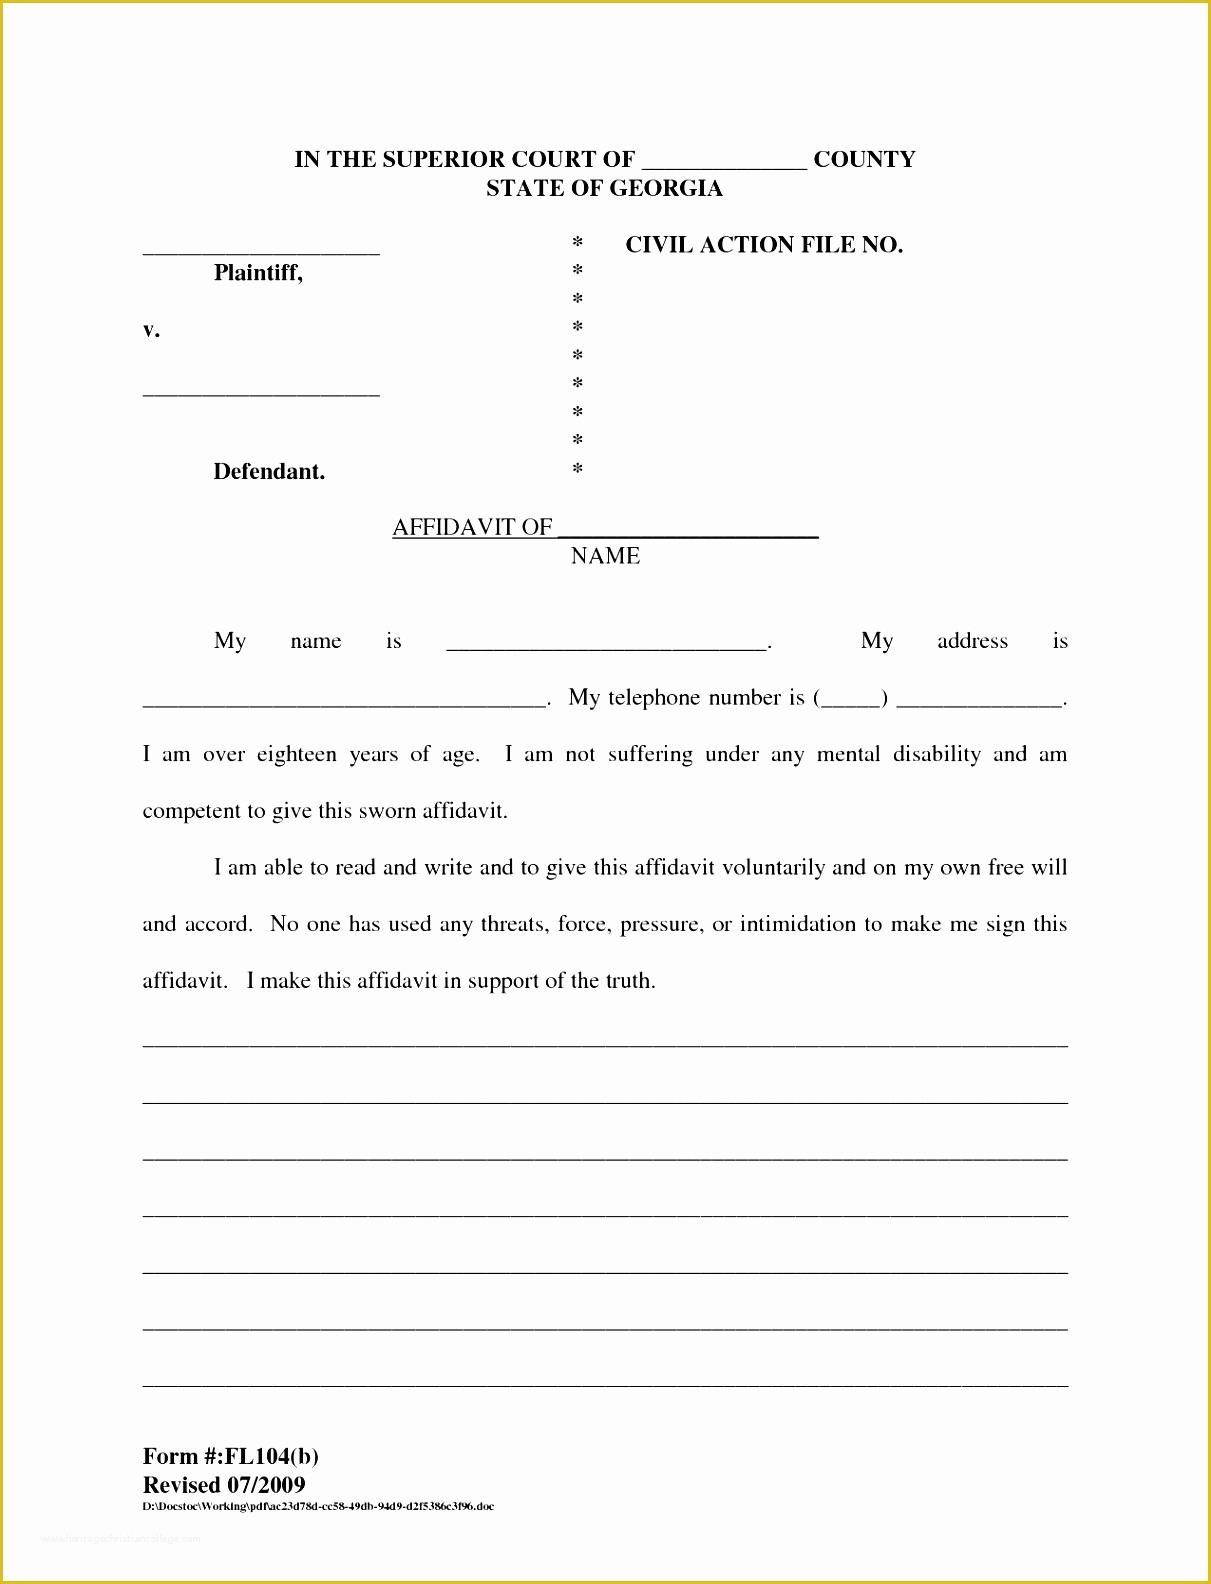 6-affidavit-form-template-in-word-sampletemplatess-sampletemplatess